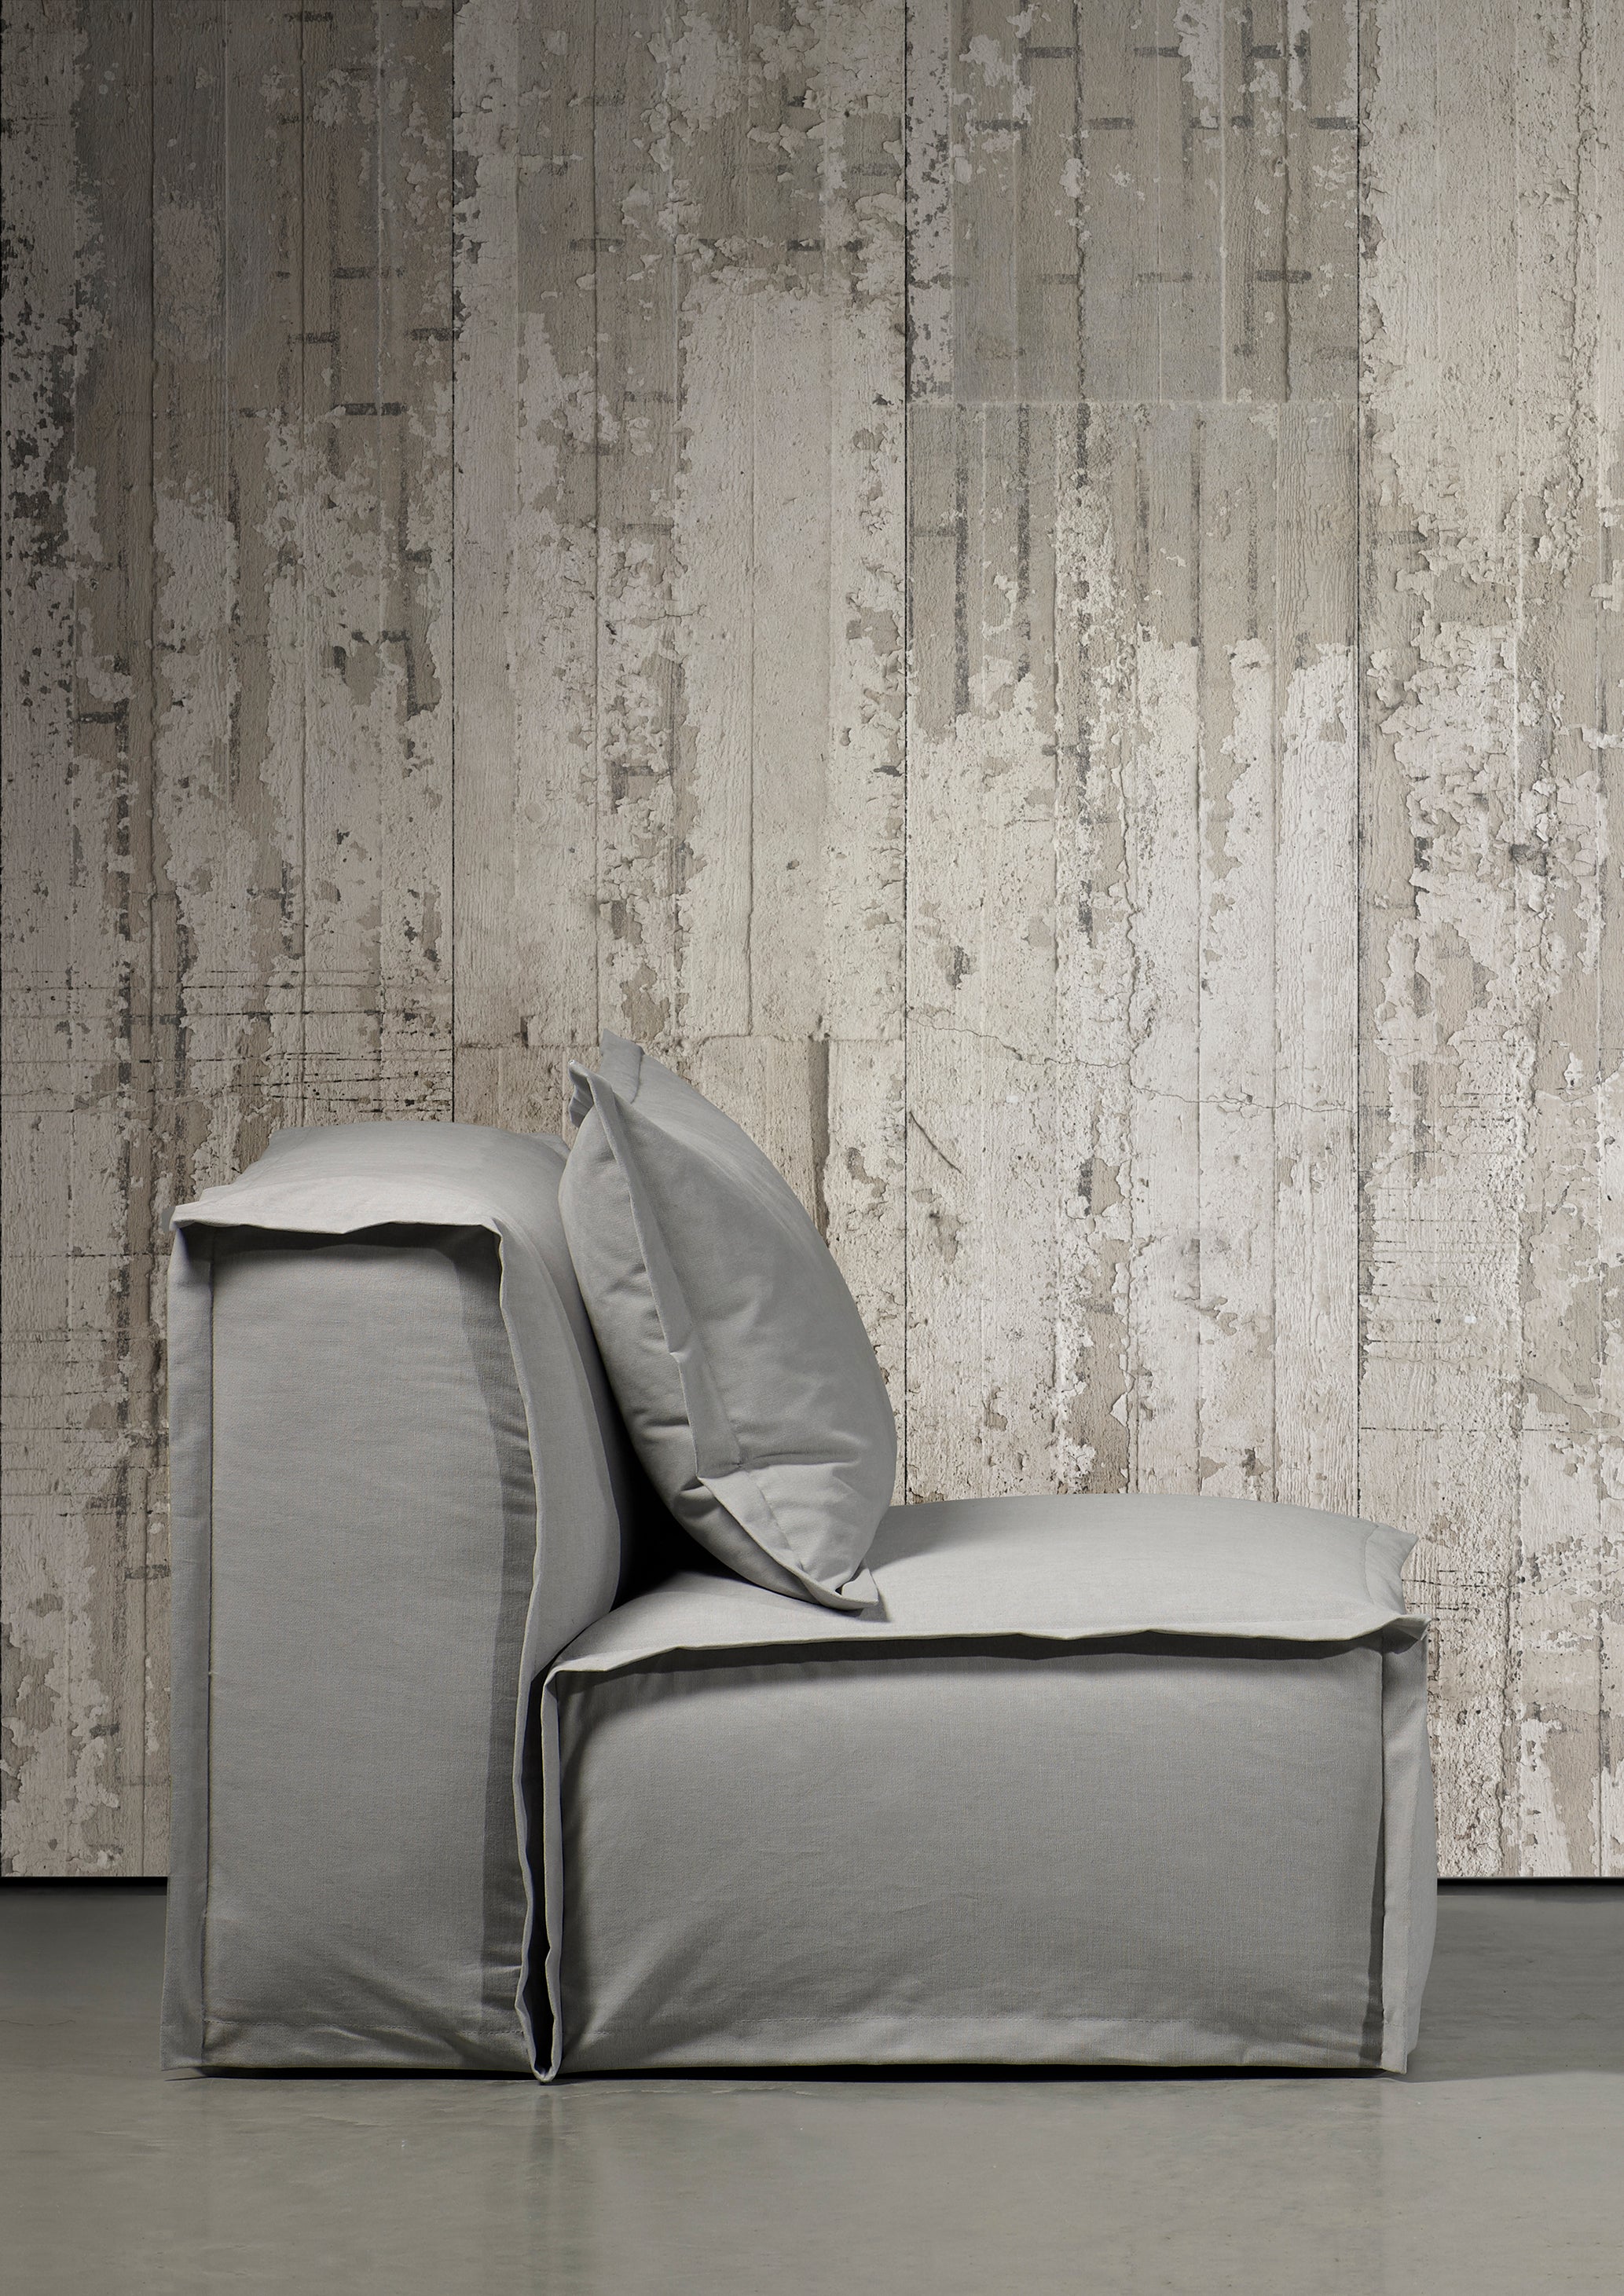 Piet Boon 06 - Concrete Wallpaper